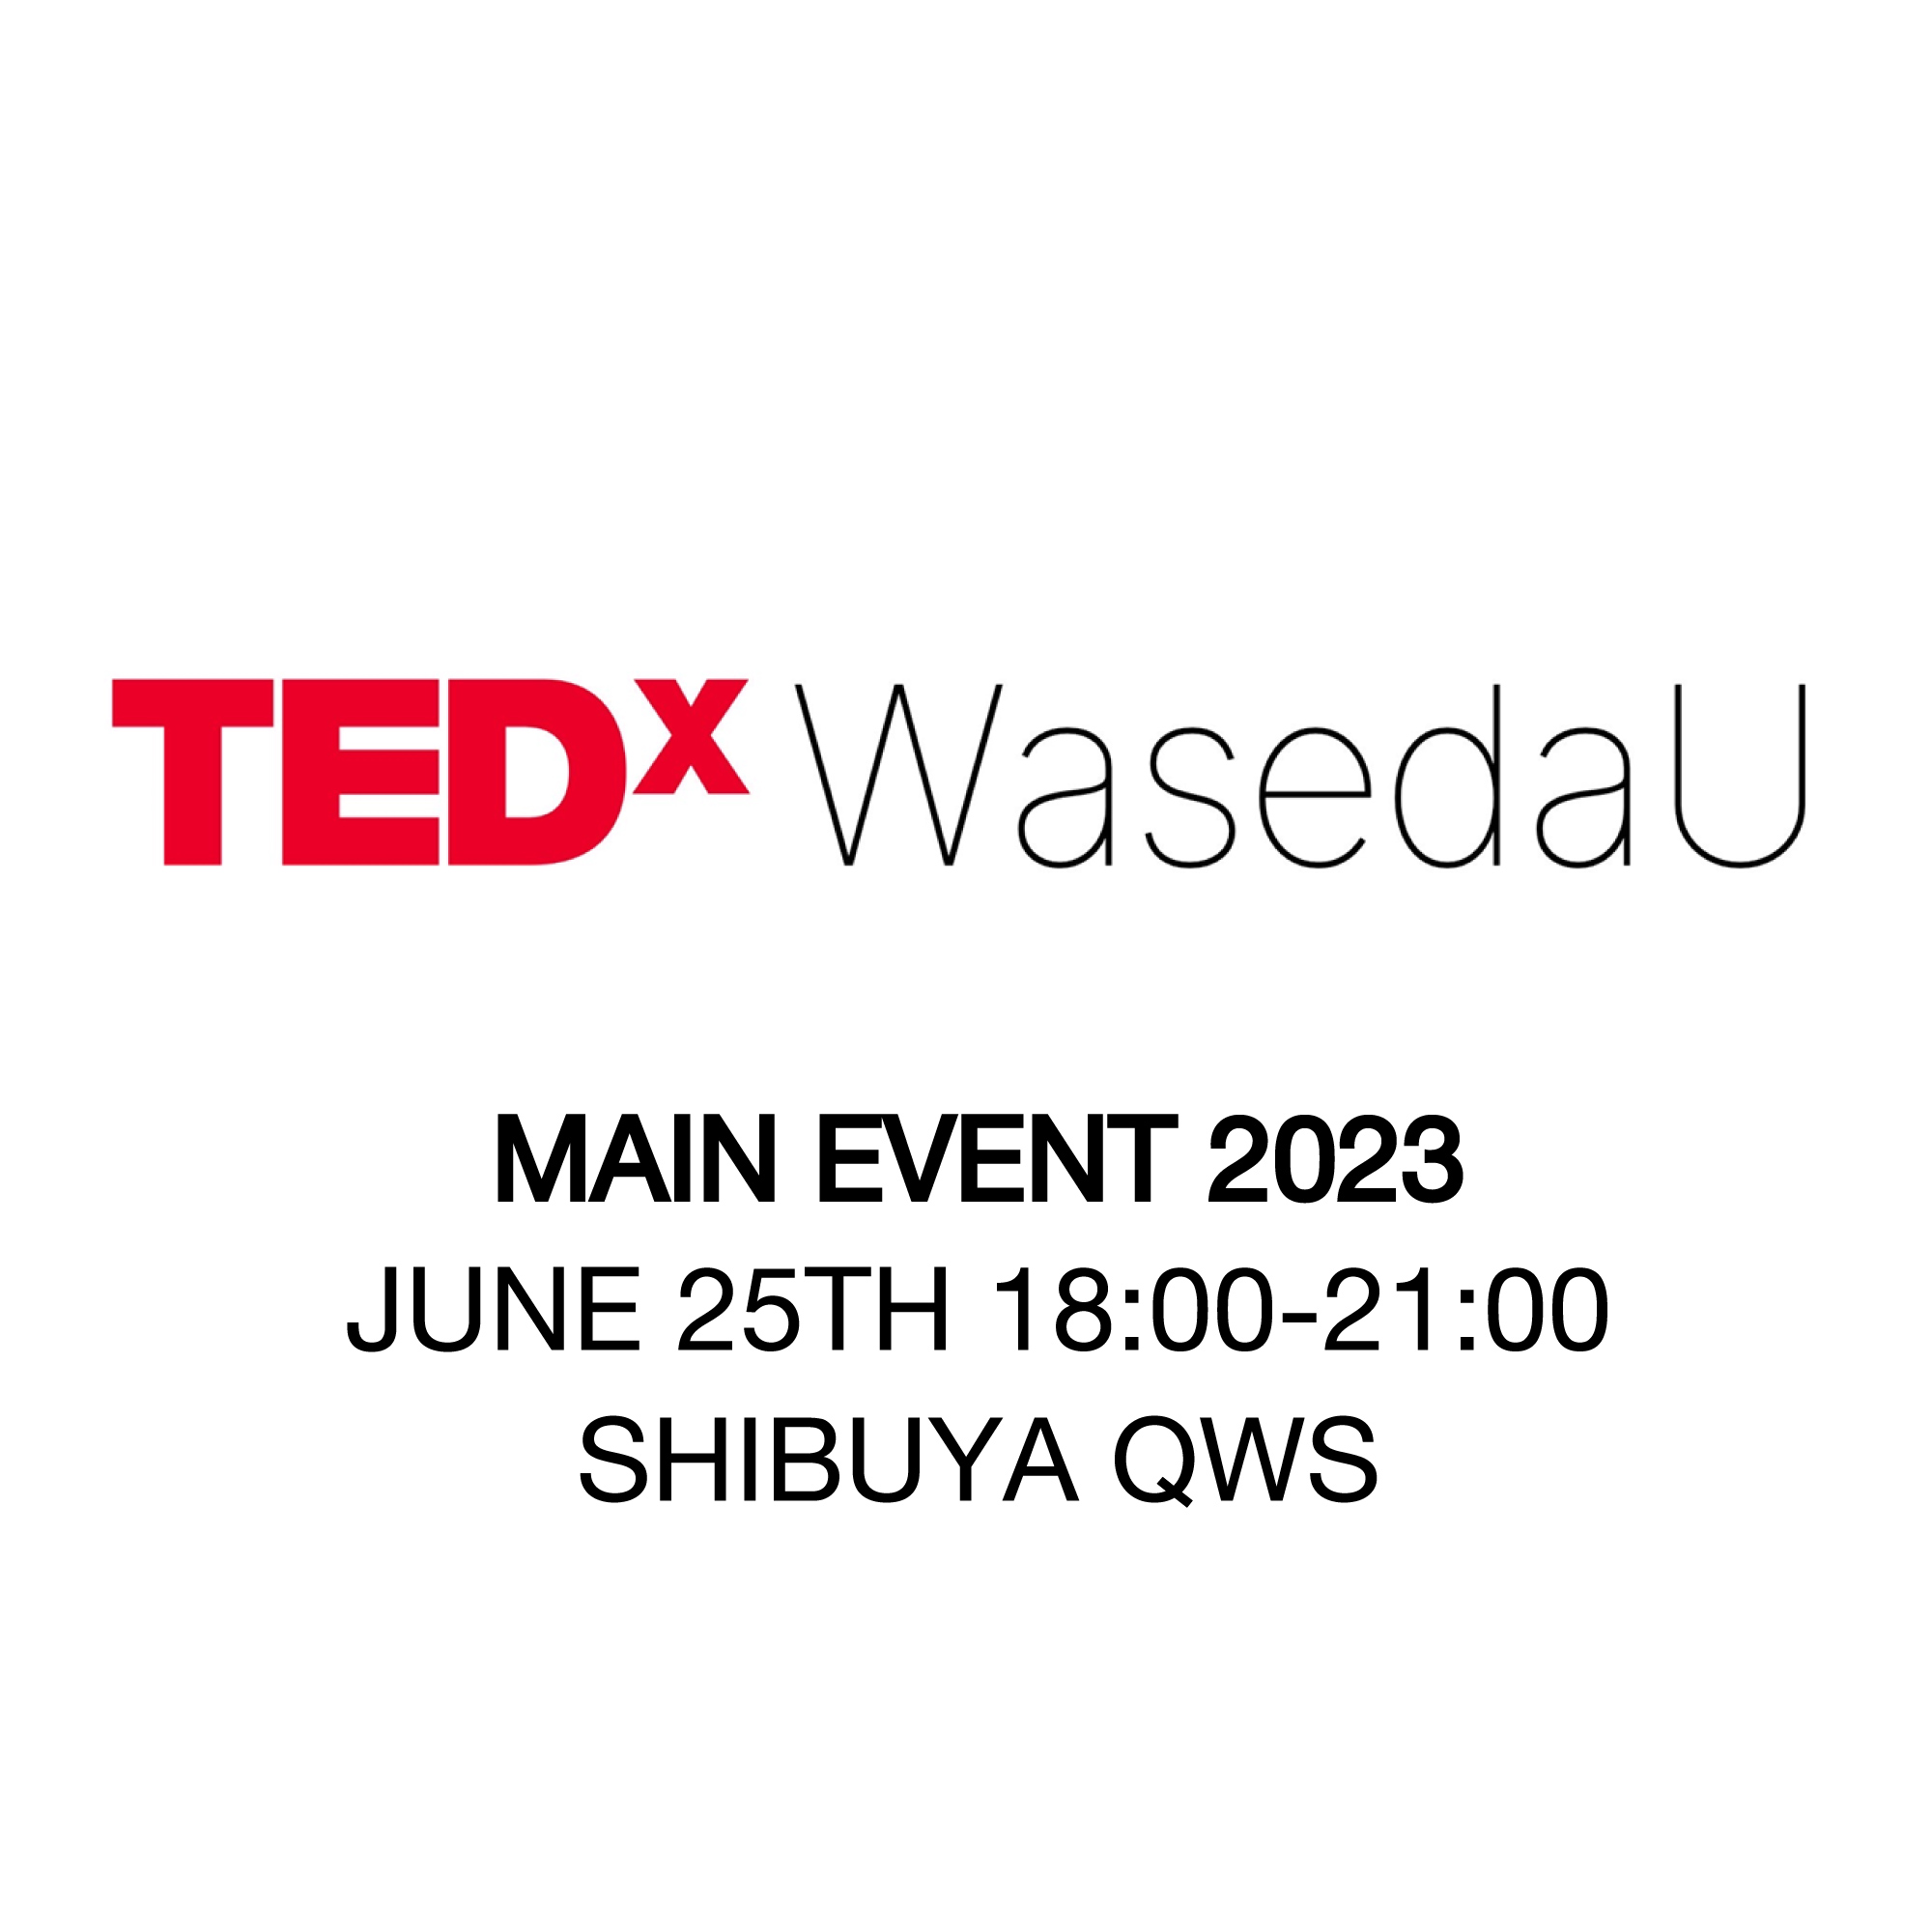 We will join to TEDxWasedaU on June 25